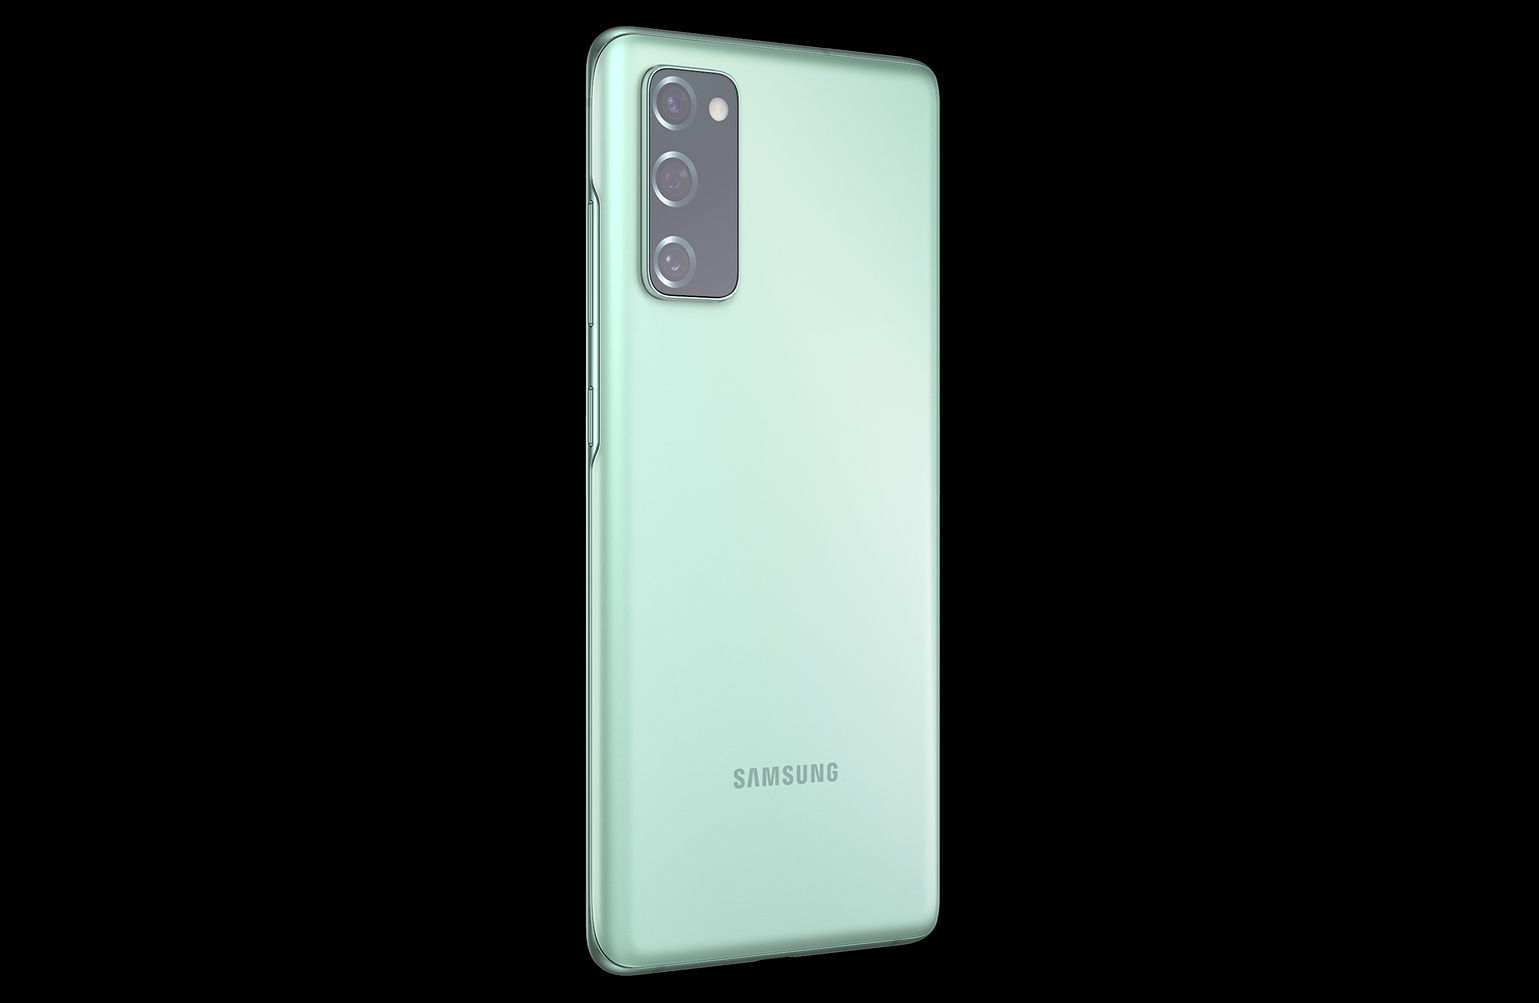 Samsung Galaxy S20 Fe 5G 128GB Factory Unlocked Cellphone, Blue